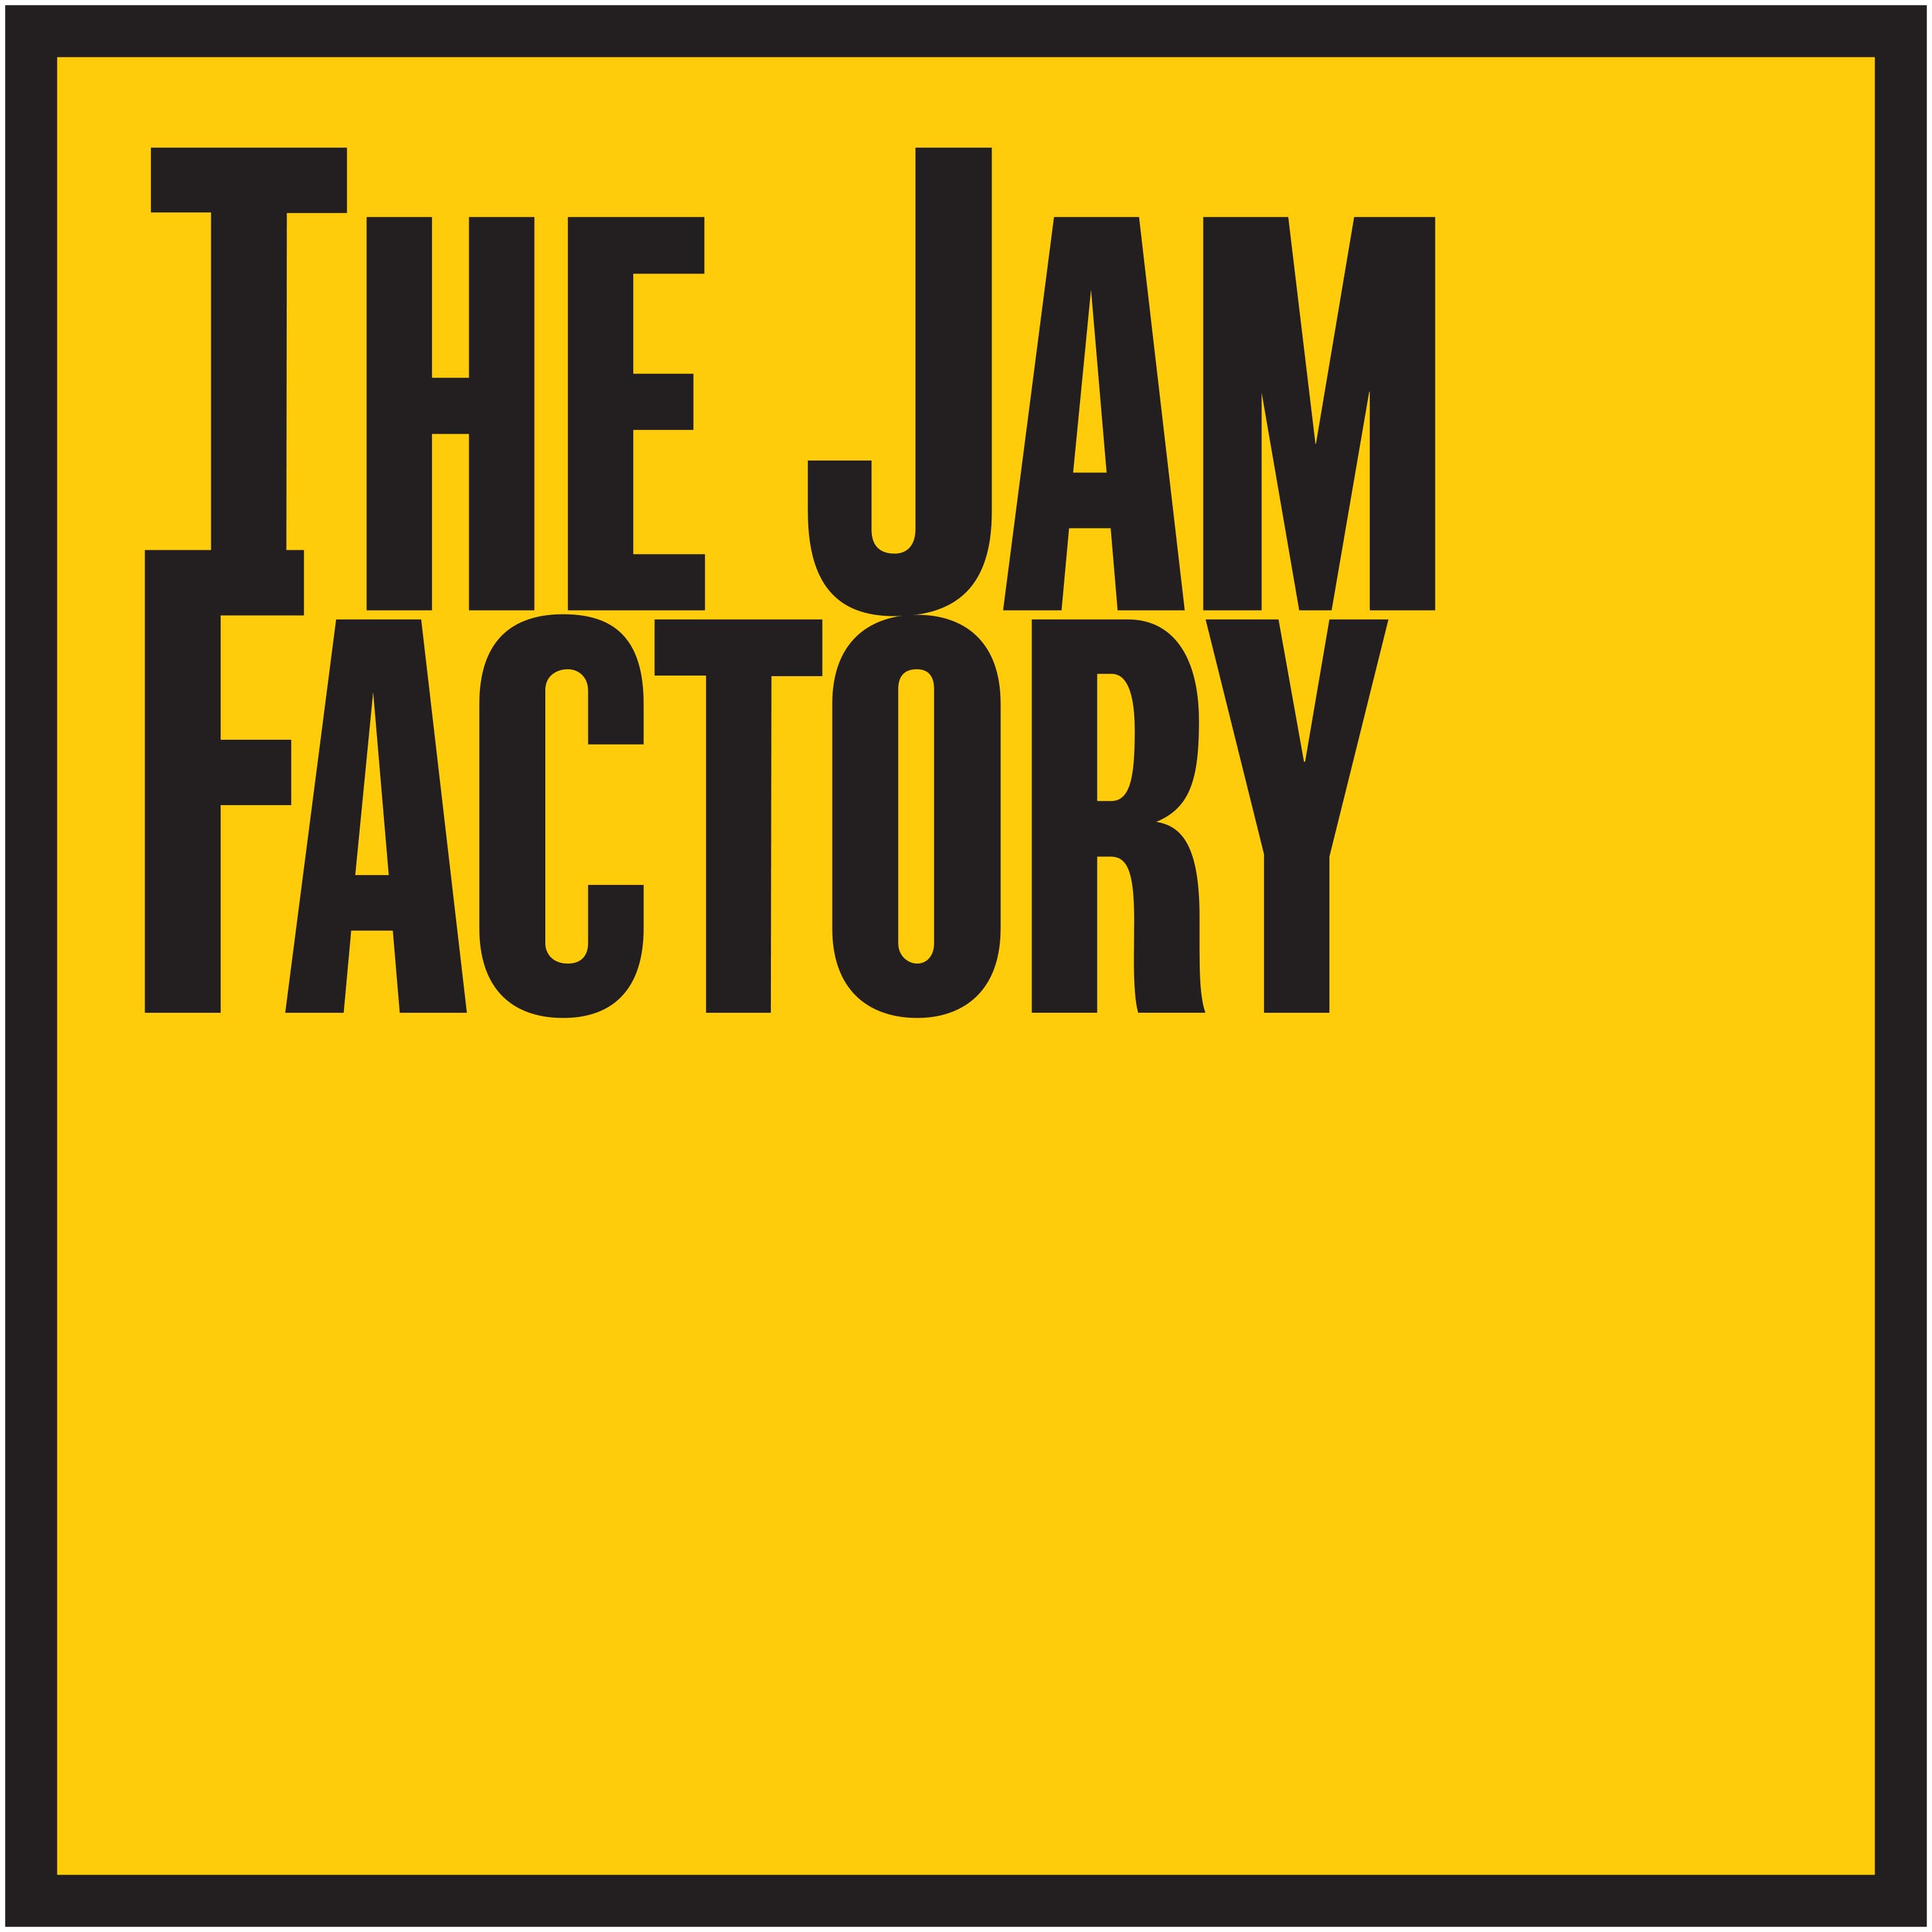 The Jam Factory Final